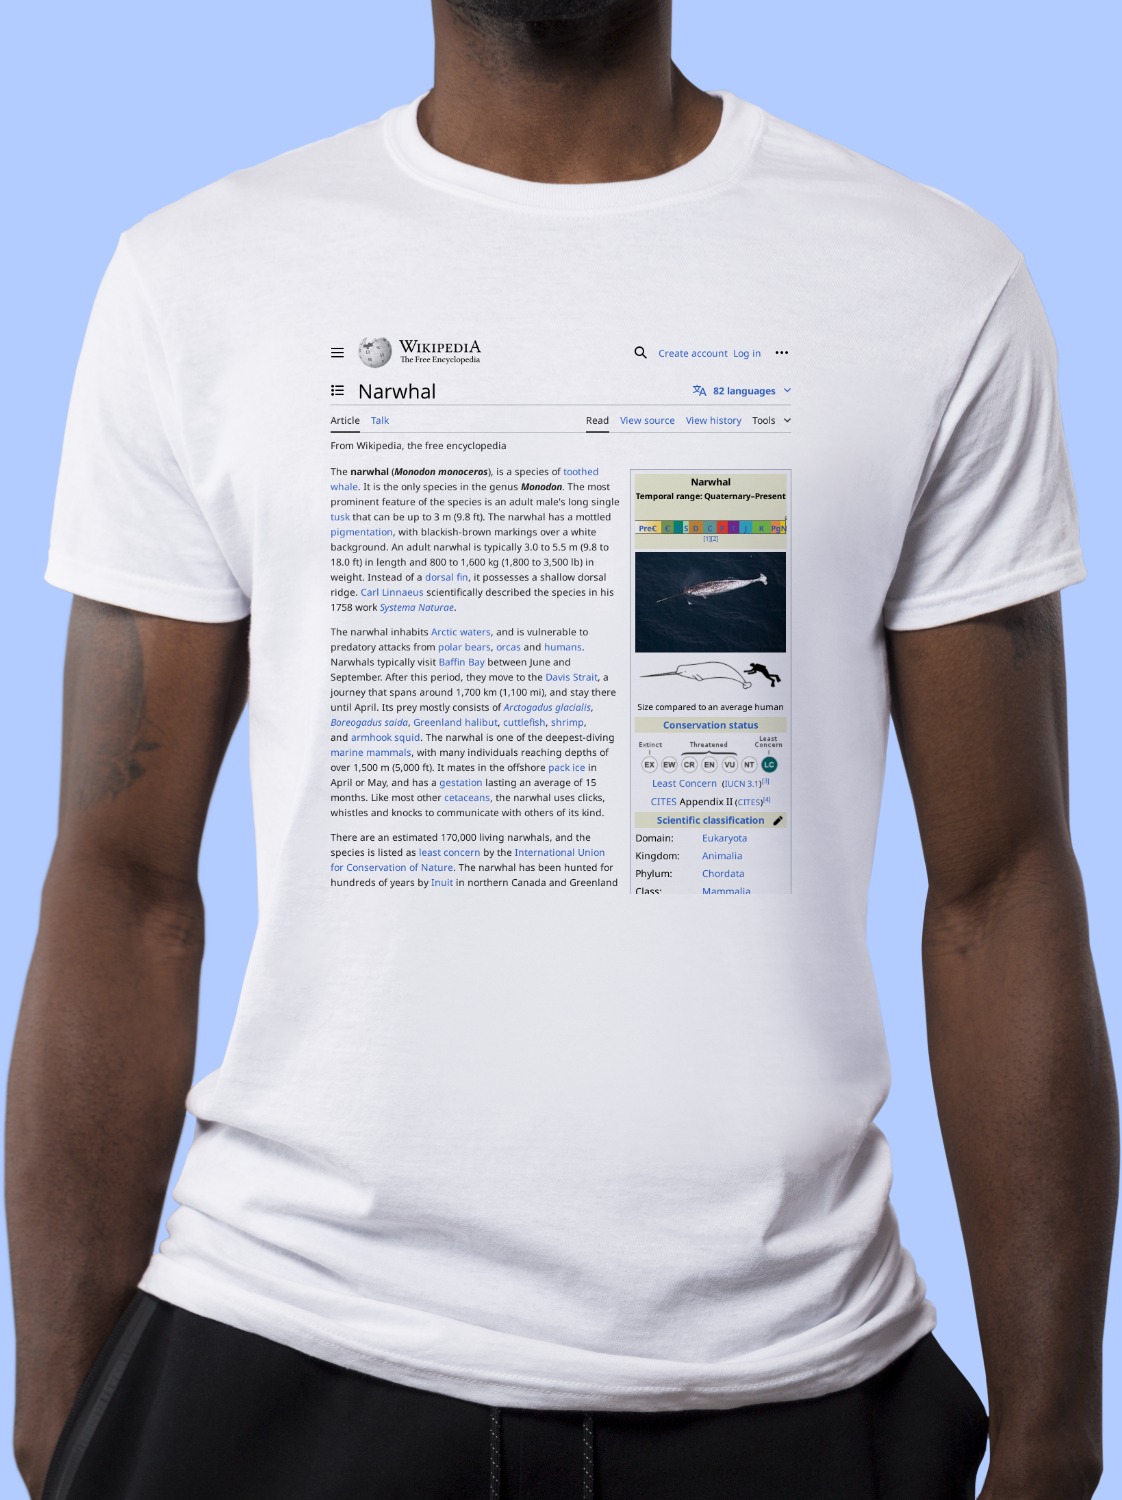 Narwhal Wikipedia Shirt